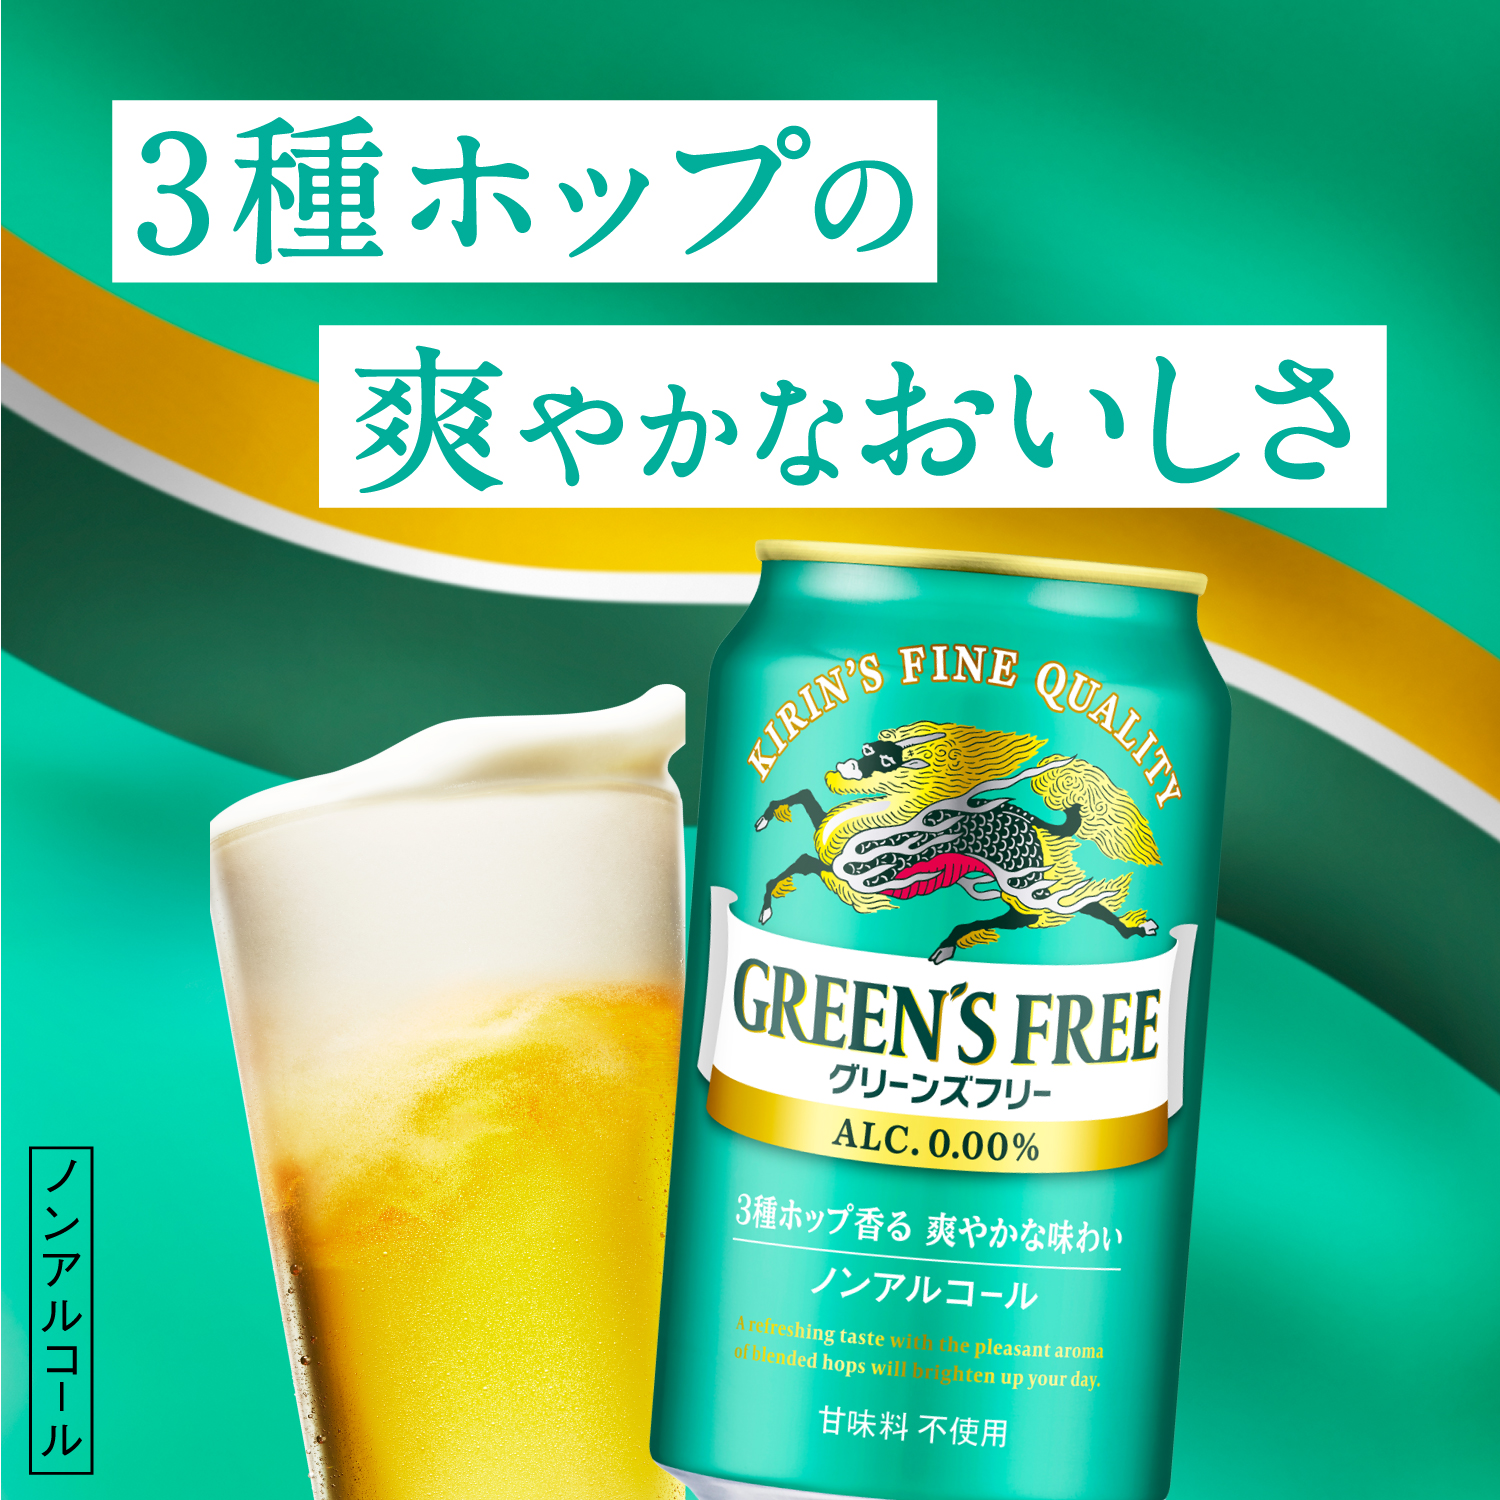 6/30 limitation +5%.... free shipping non-alcohol beer giraffe green z free 500ml×48ps.@/2 case 